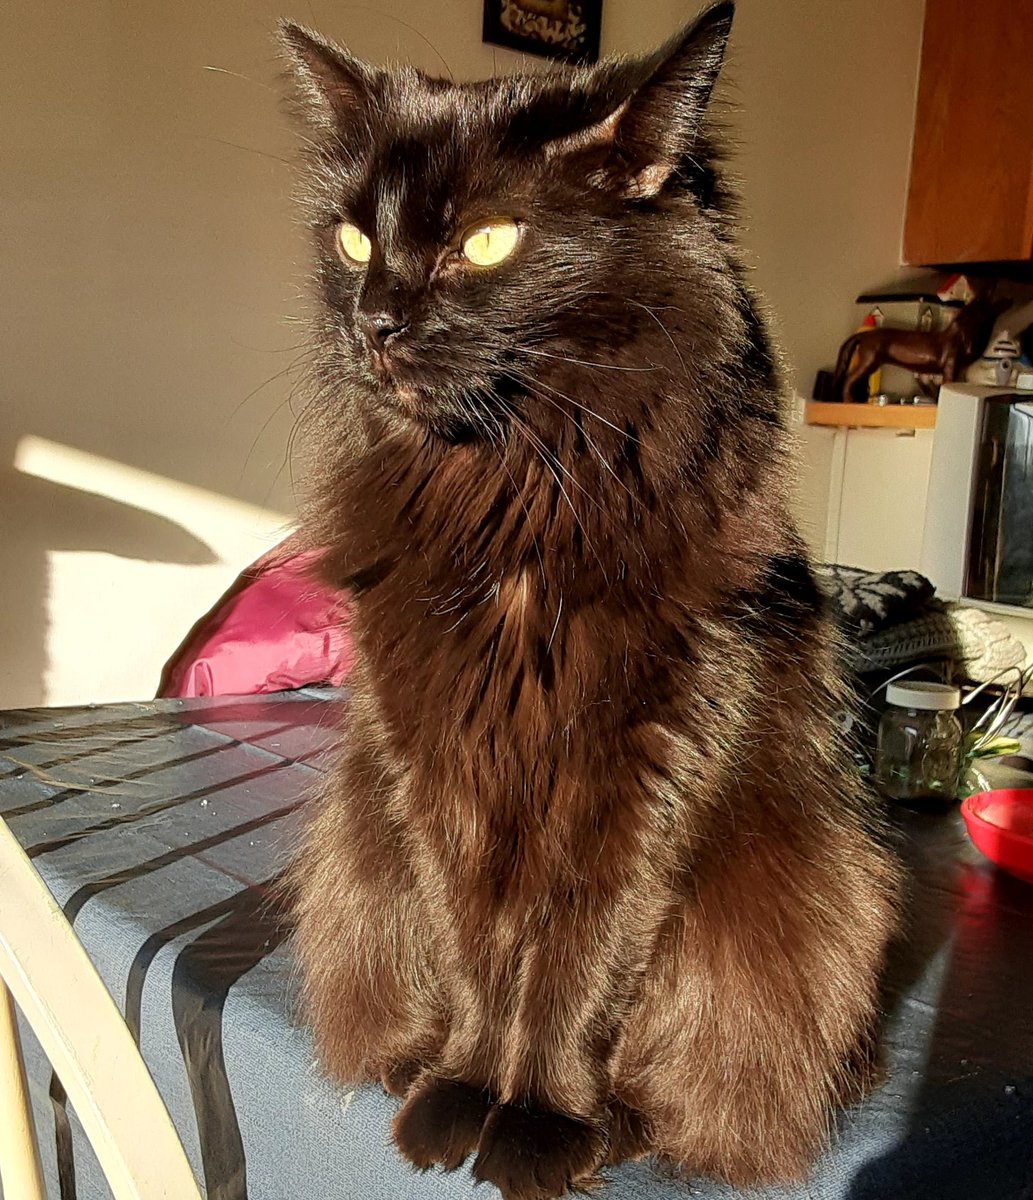 My beautiful baby 😍🥰
#CatsOfTwitter #blackcat #adoptdontshop #loveblackcats